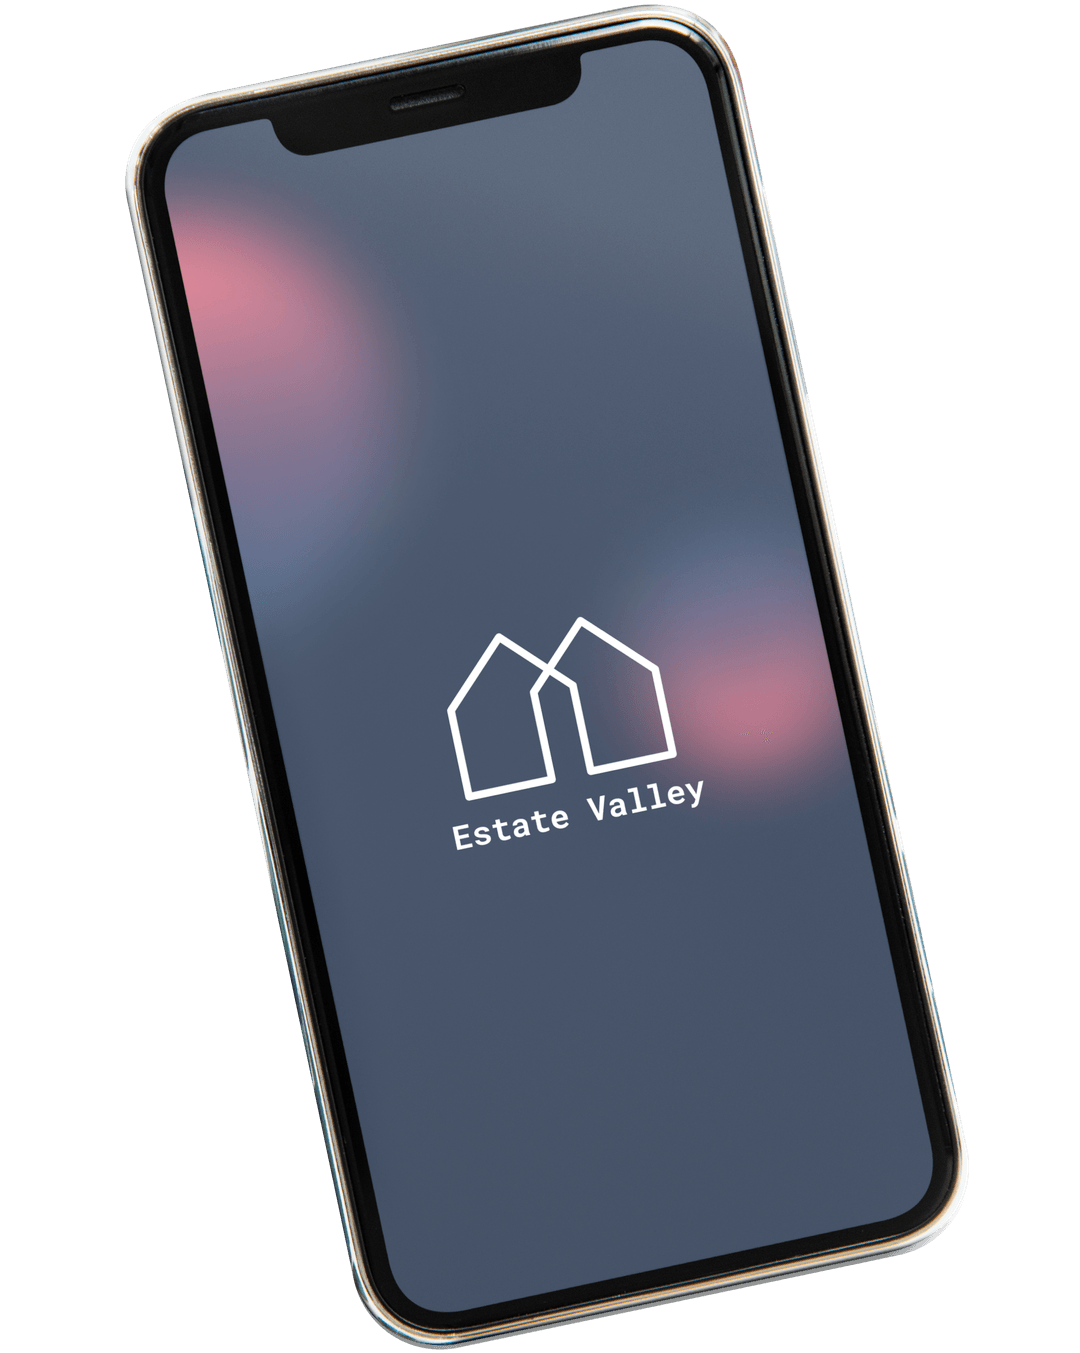 Estate Valley - App